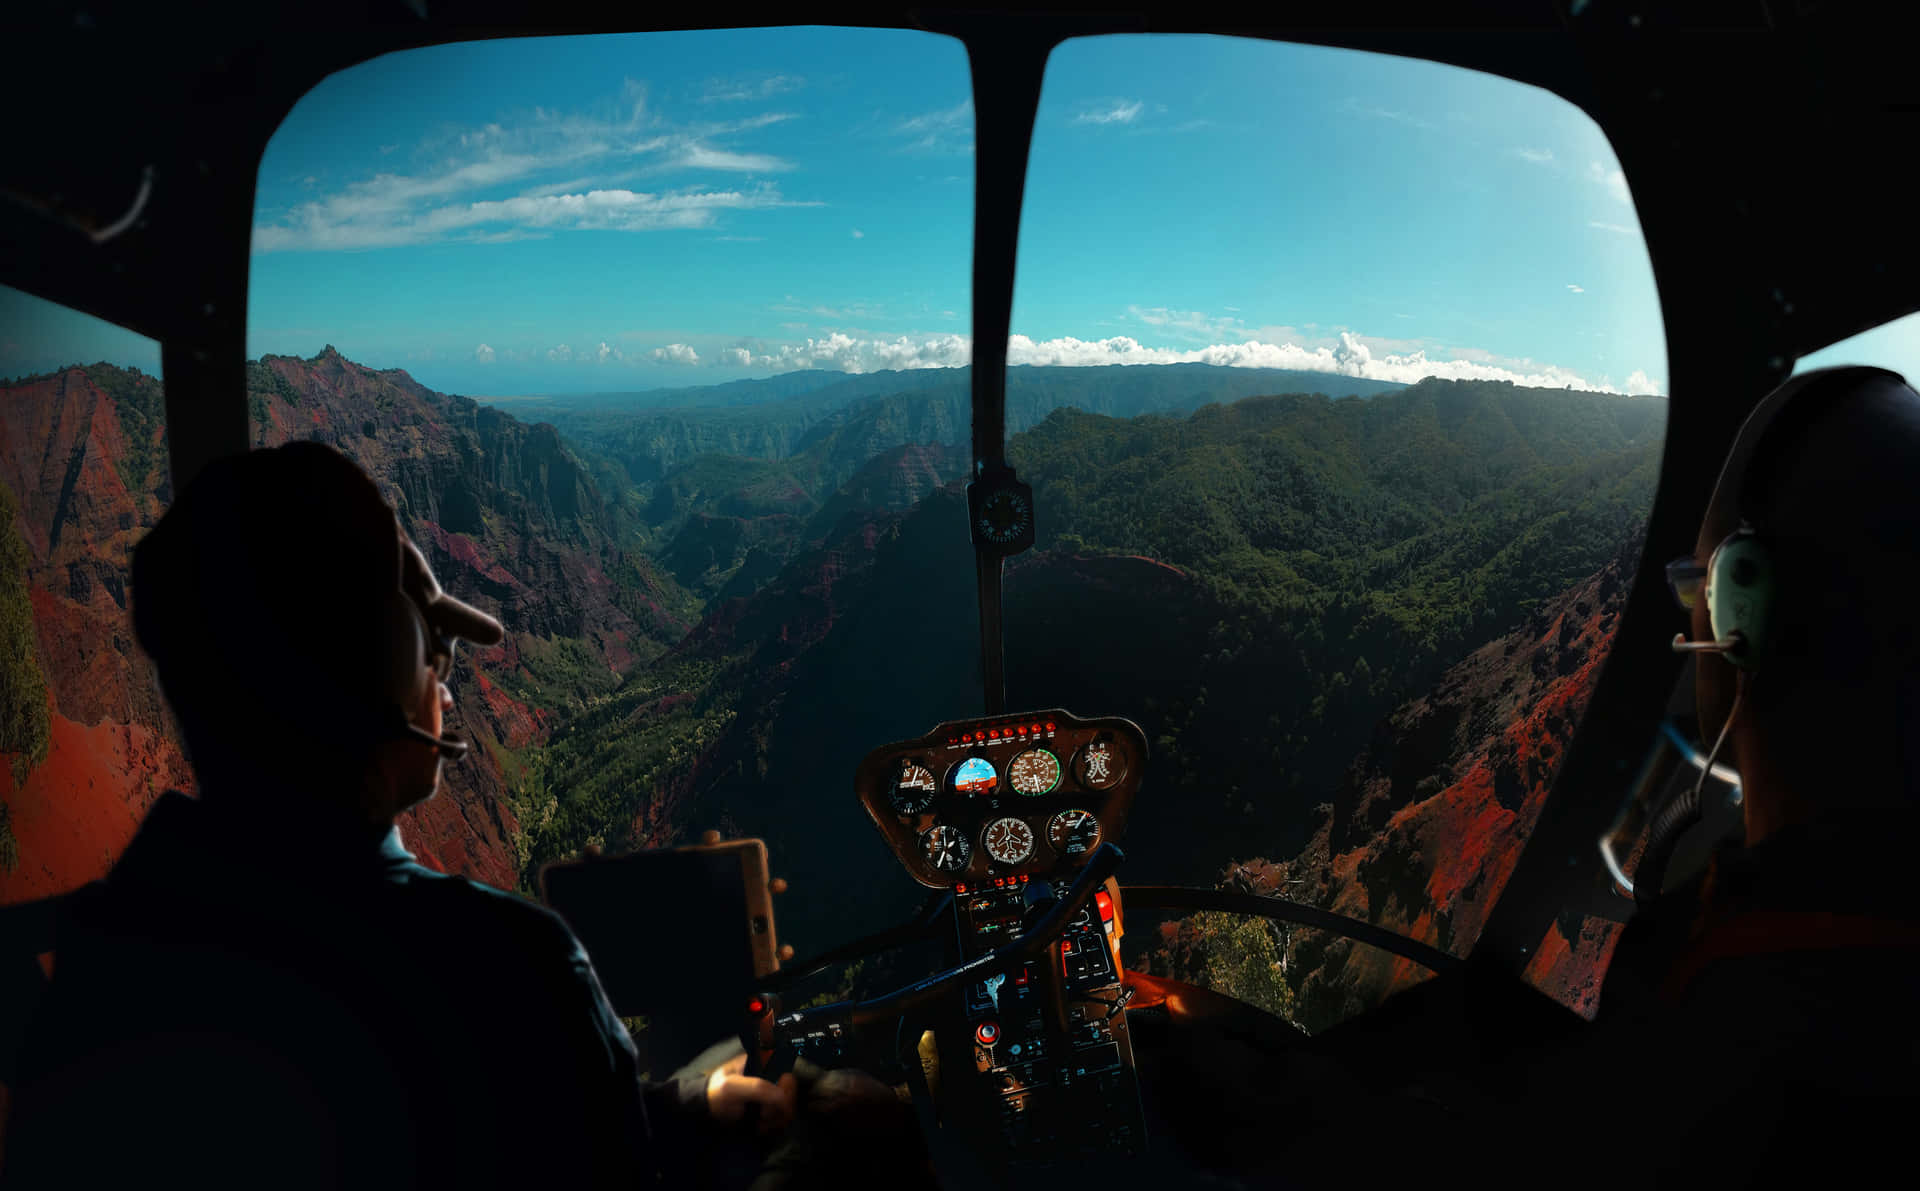 Caption: Majestic Helicopter Soaring Through Azure Skies